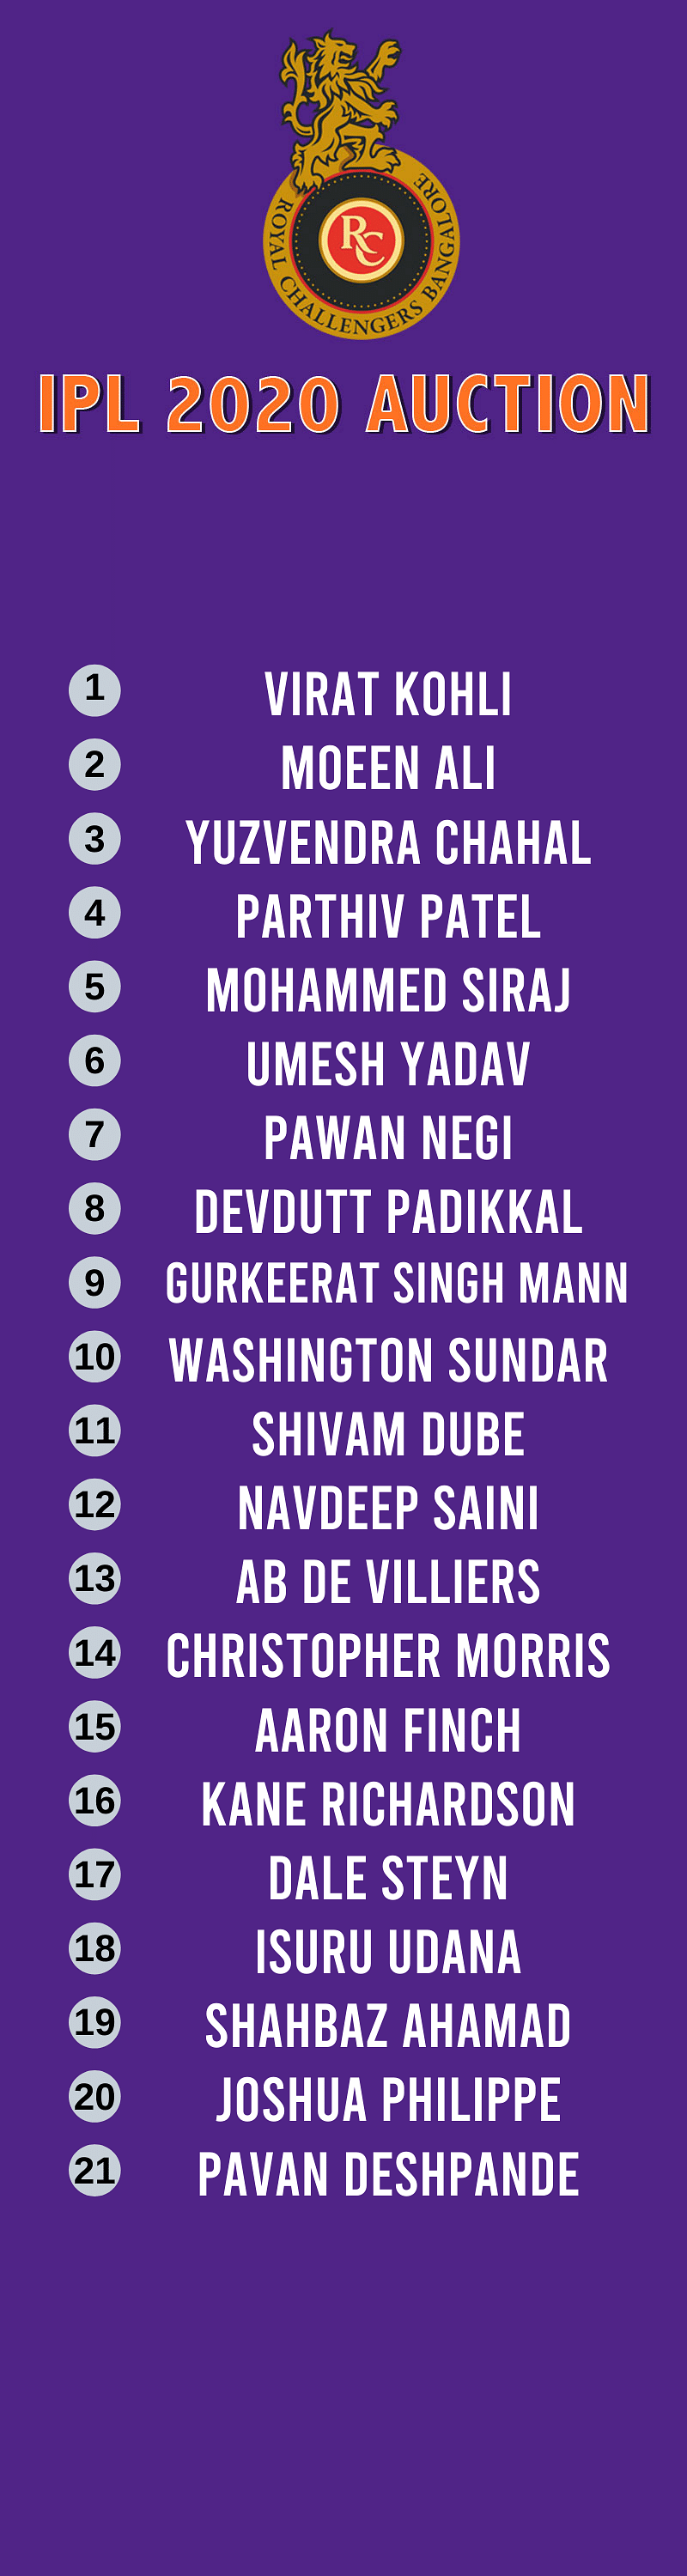 The complete team list of Virat Kohli’s Royal Challengers Bangalore squad after the 2020 IPL auction.